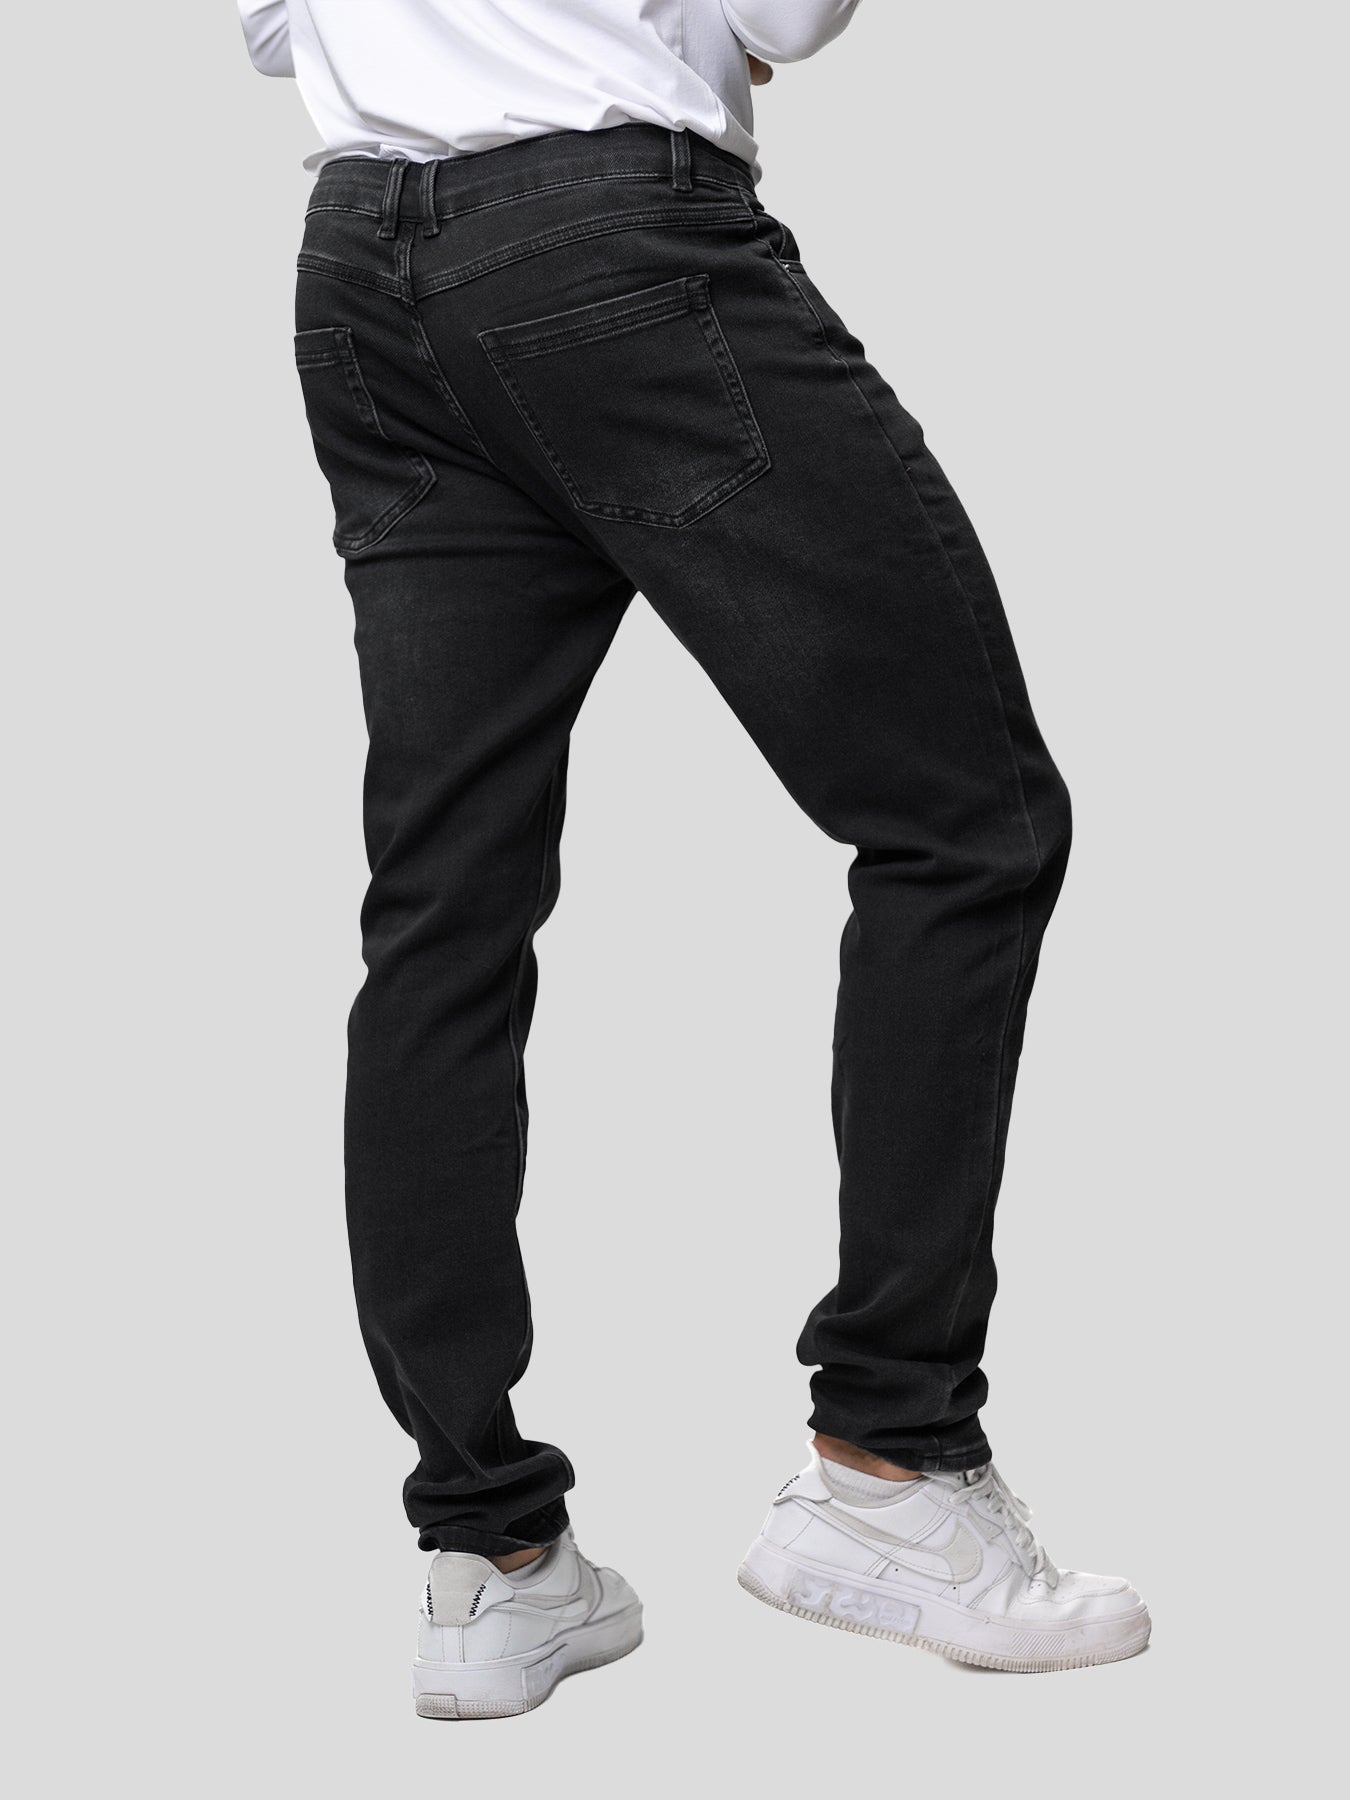 Fioboc Men\'s Pants Jeans High Classic Stretch